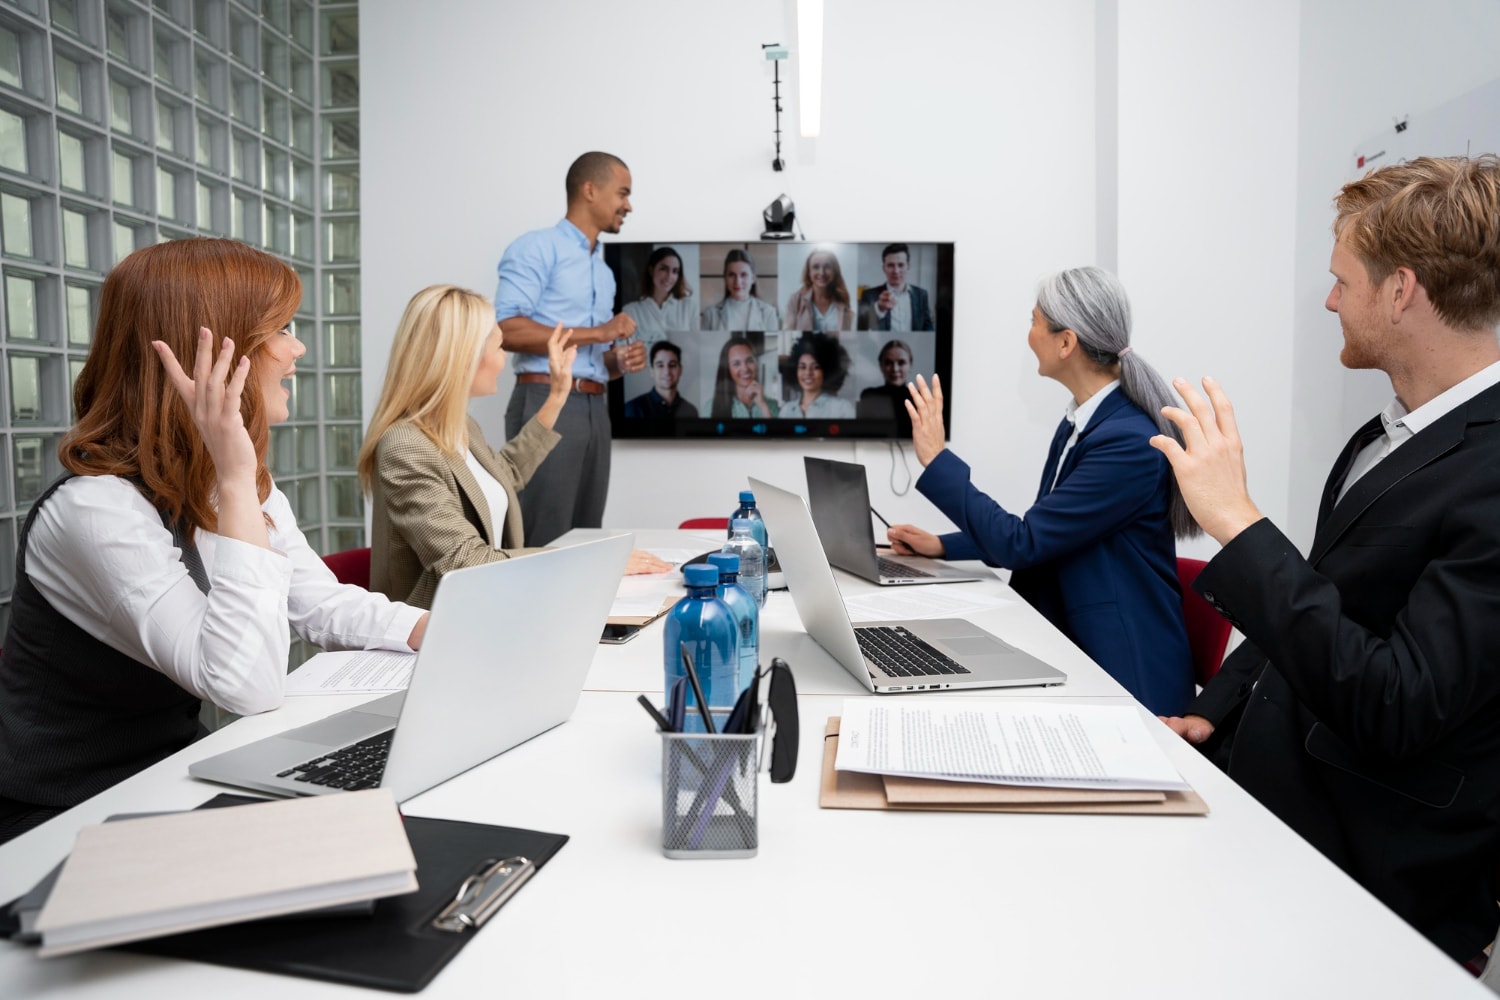 video conferencing service